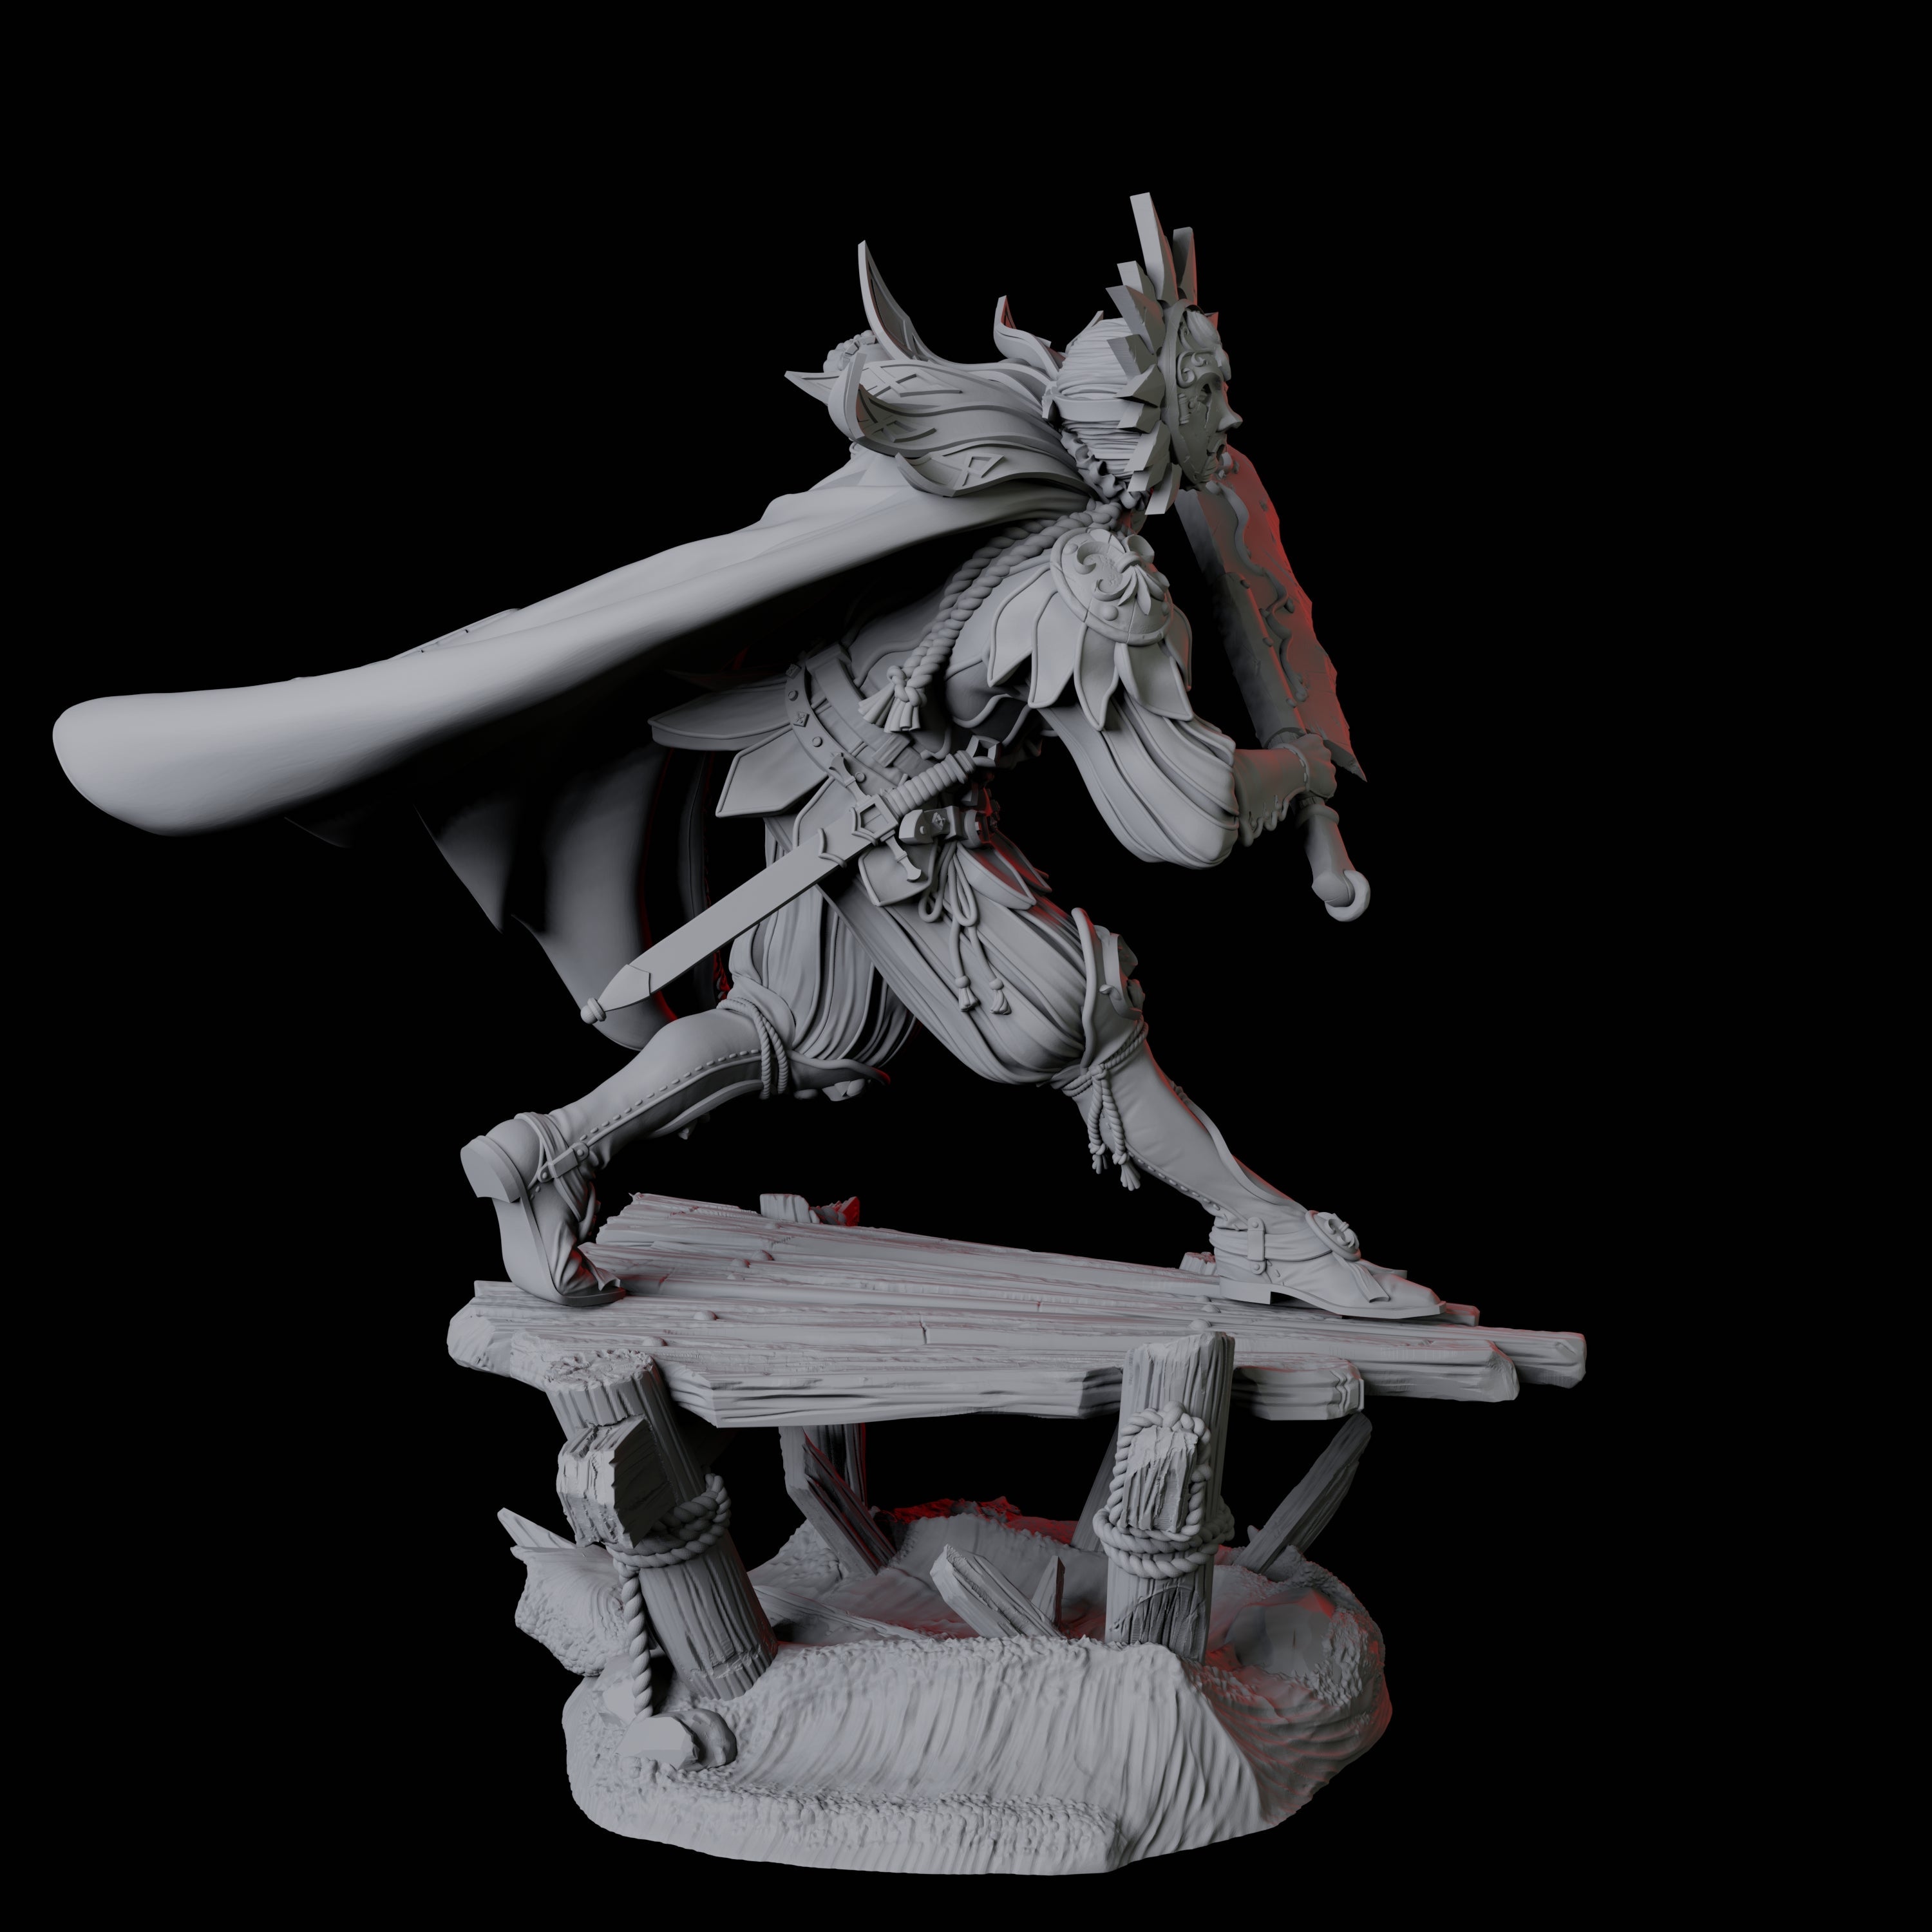 Sun Mask Gunslinger Assassin Miniature for Dungeons and Dragons, Pathfinder or other TTRPGs